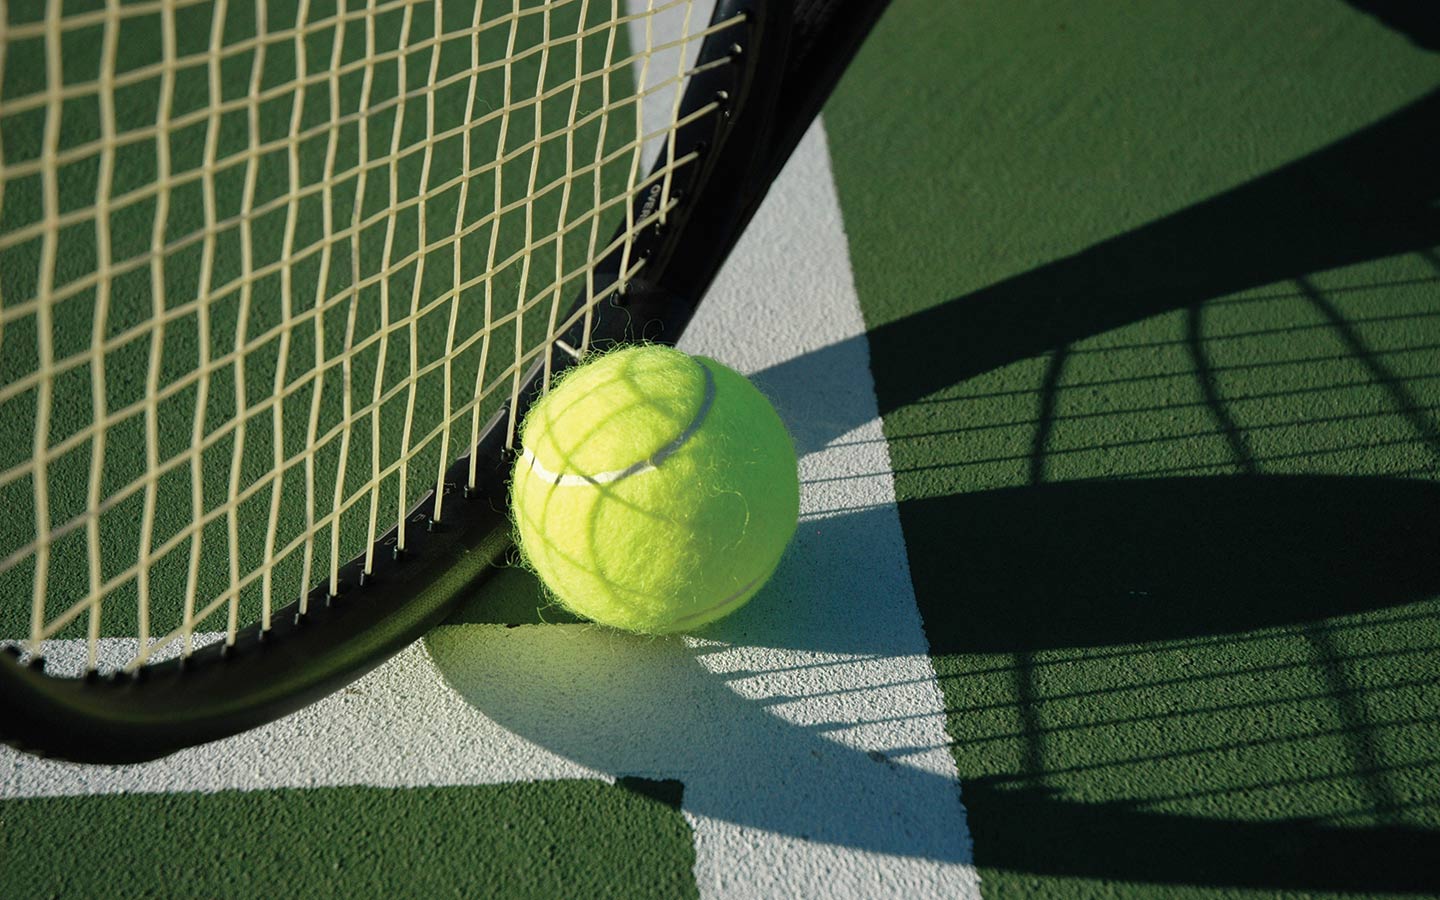 Tennis-Ball-Racket-close-1440x900.jpg